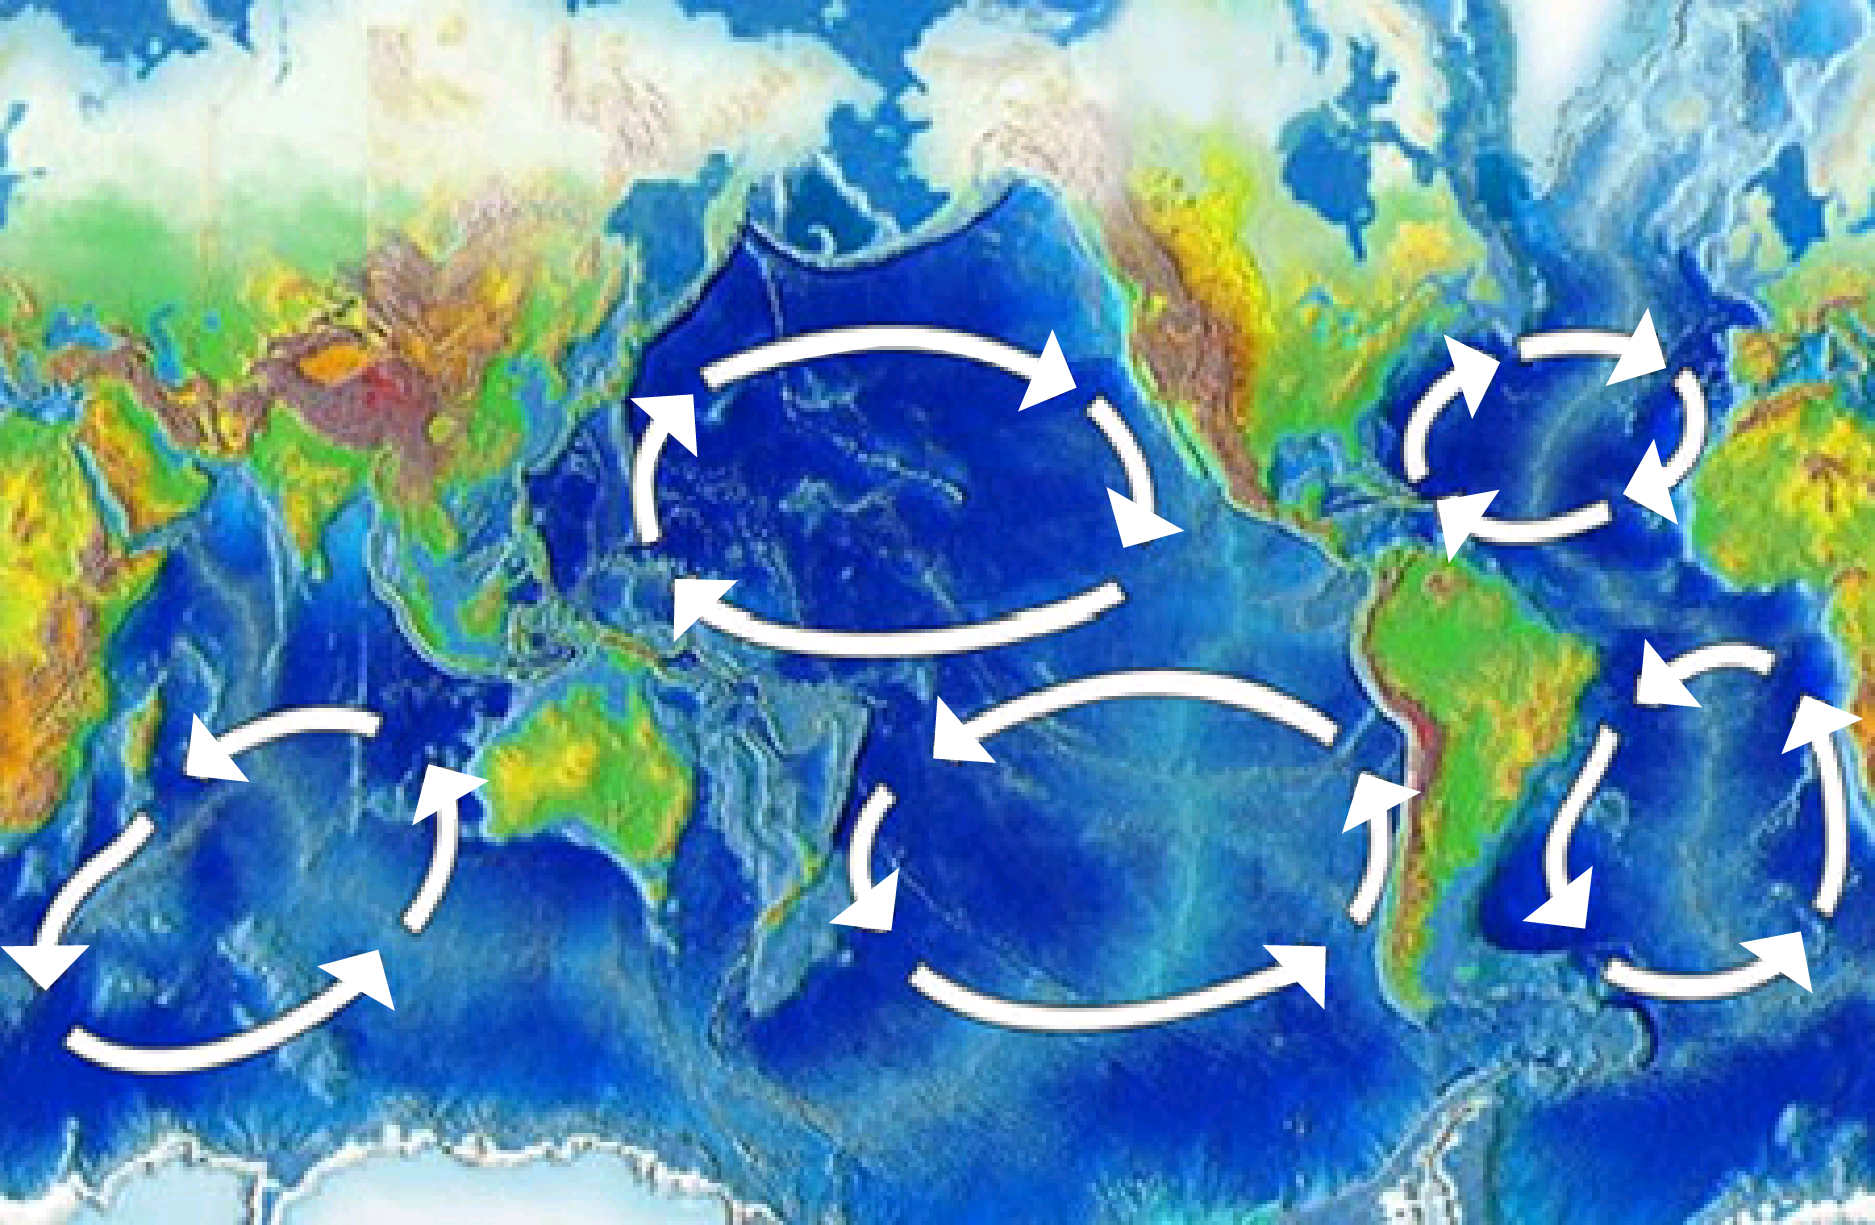 The five major ocean-wide gyres — the North Atlantic, South Atlantic, North Pacific, South Pacific, and Indian Ocean gyres.